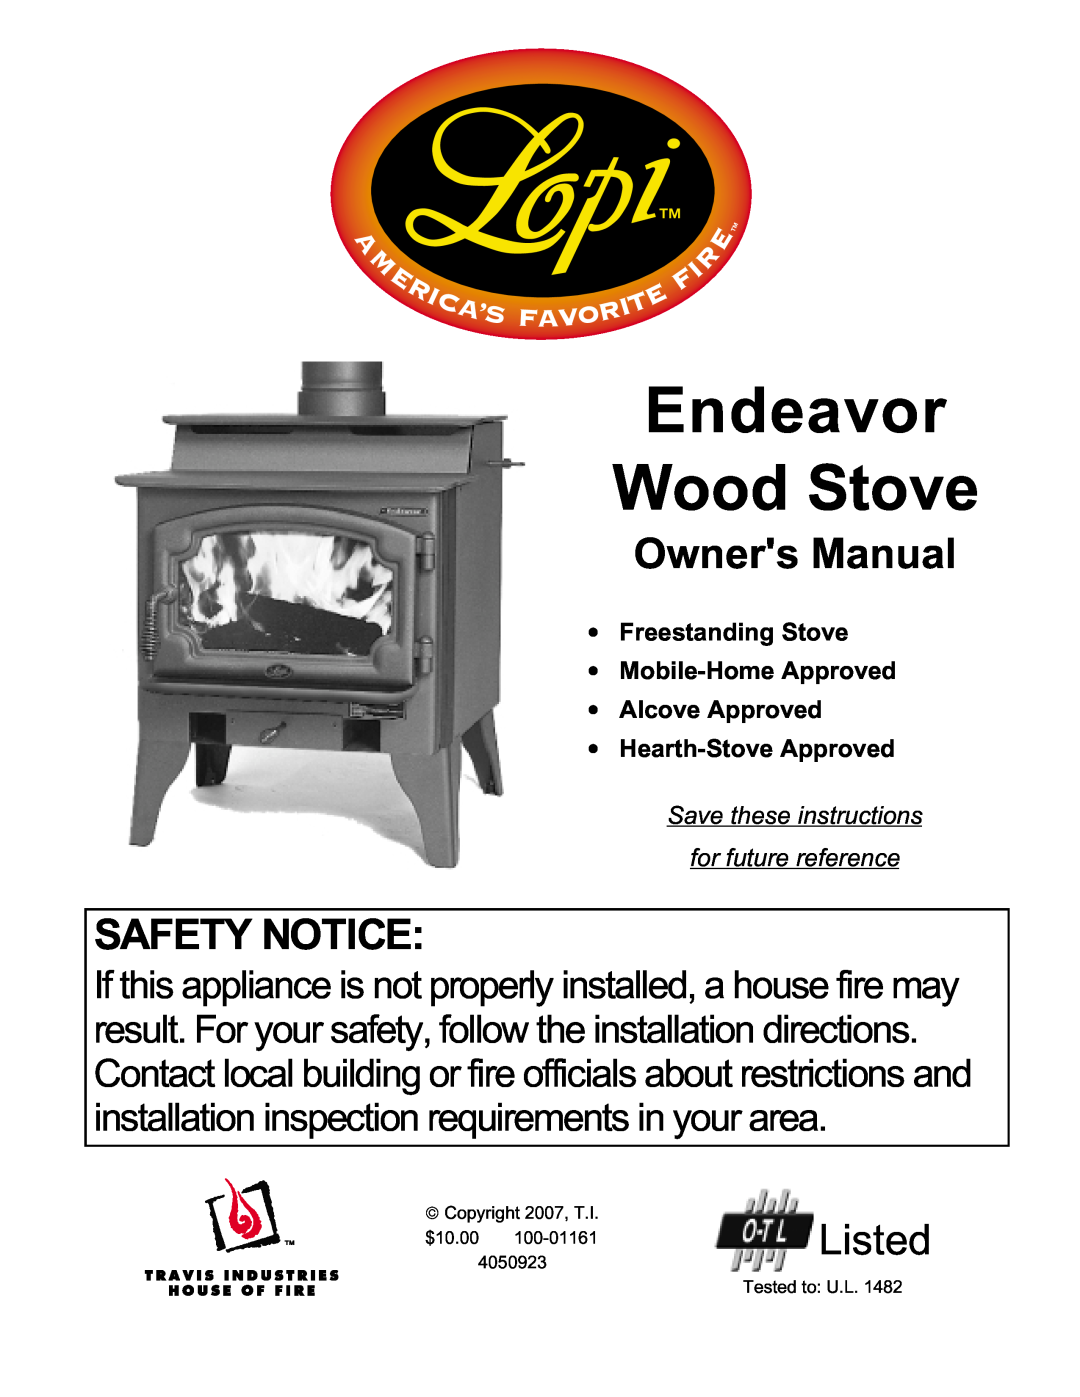 Lopi owner manual Endeavor Wood Stove, Safety Notice, Listed 